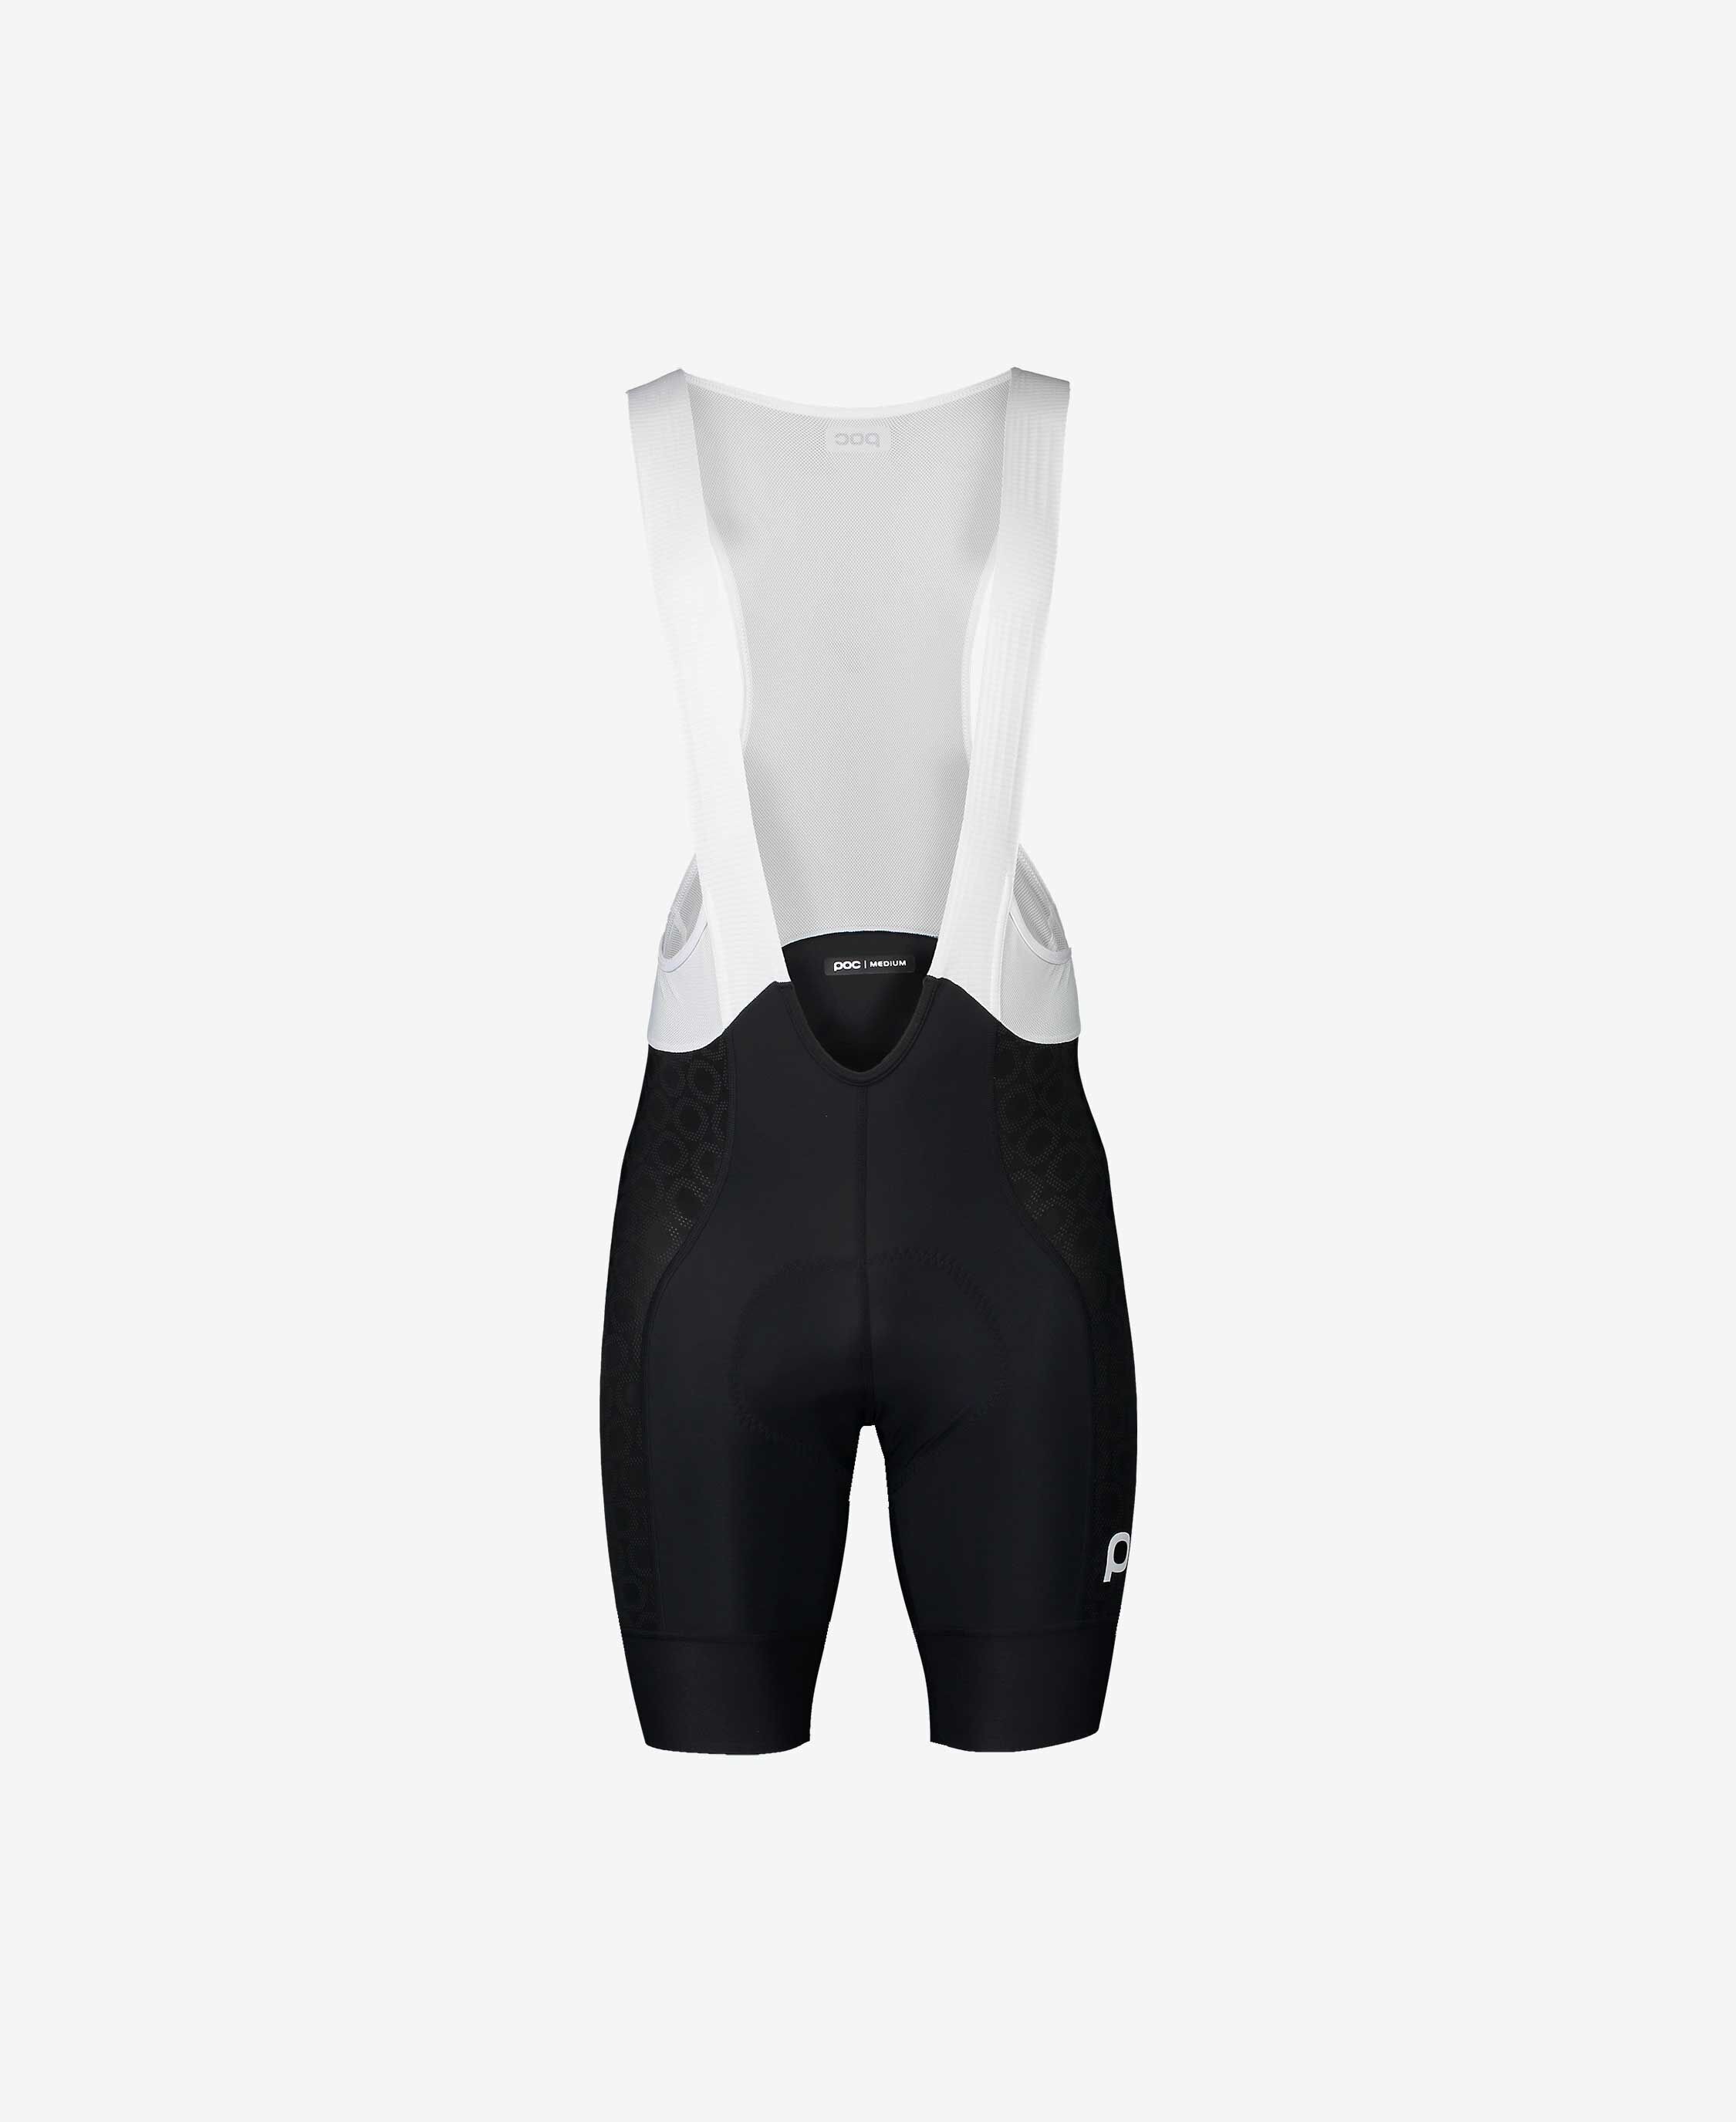 Poc Ceramic VPDs Bib Shorts - Cycling shorts - Men's